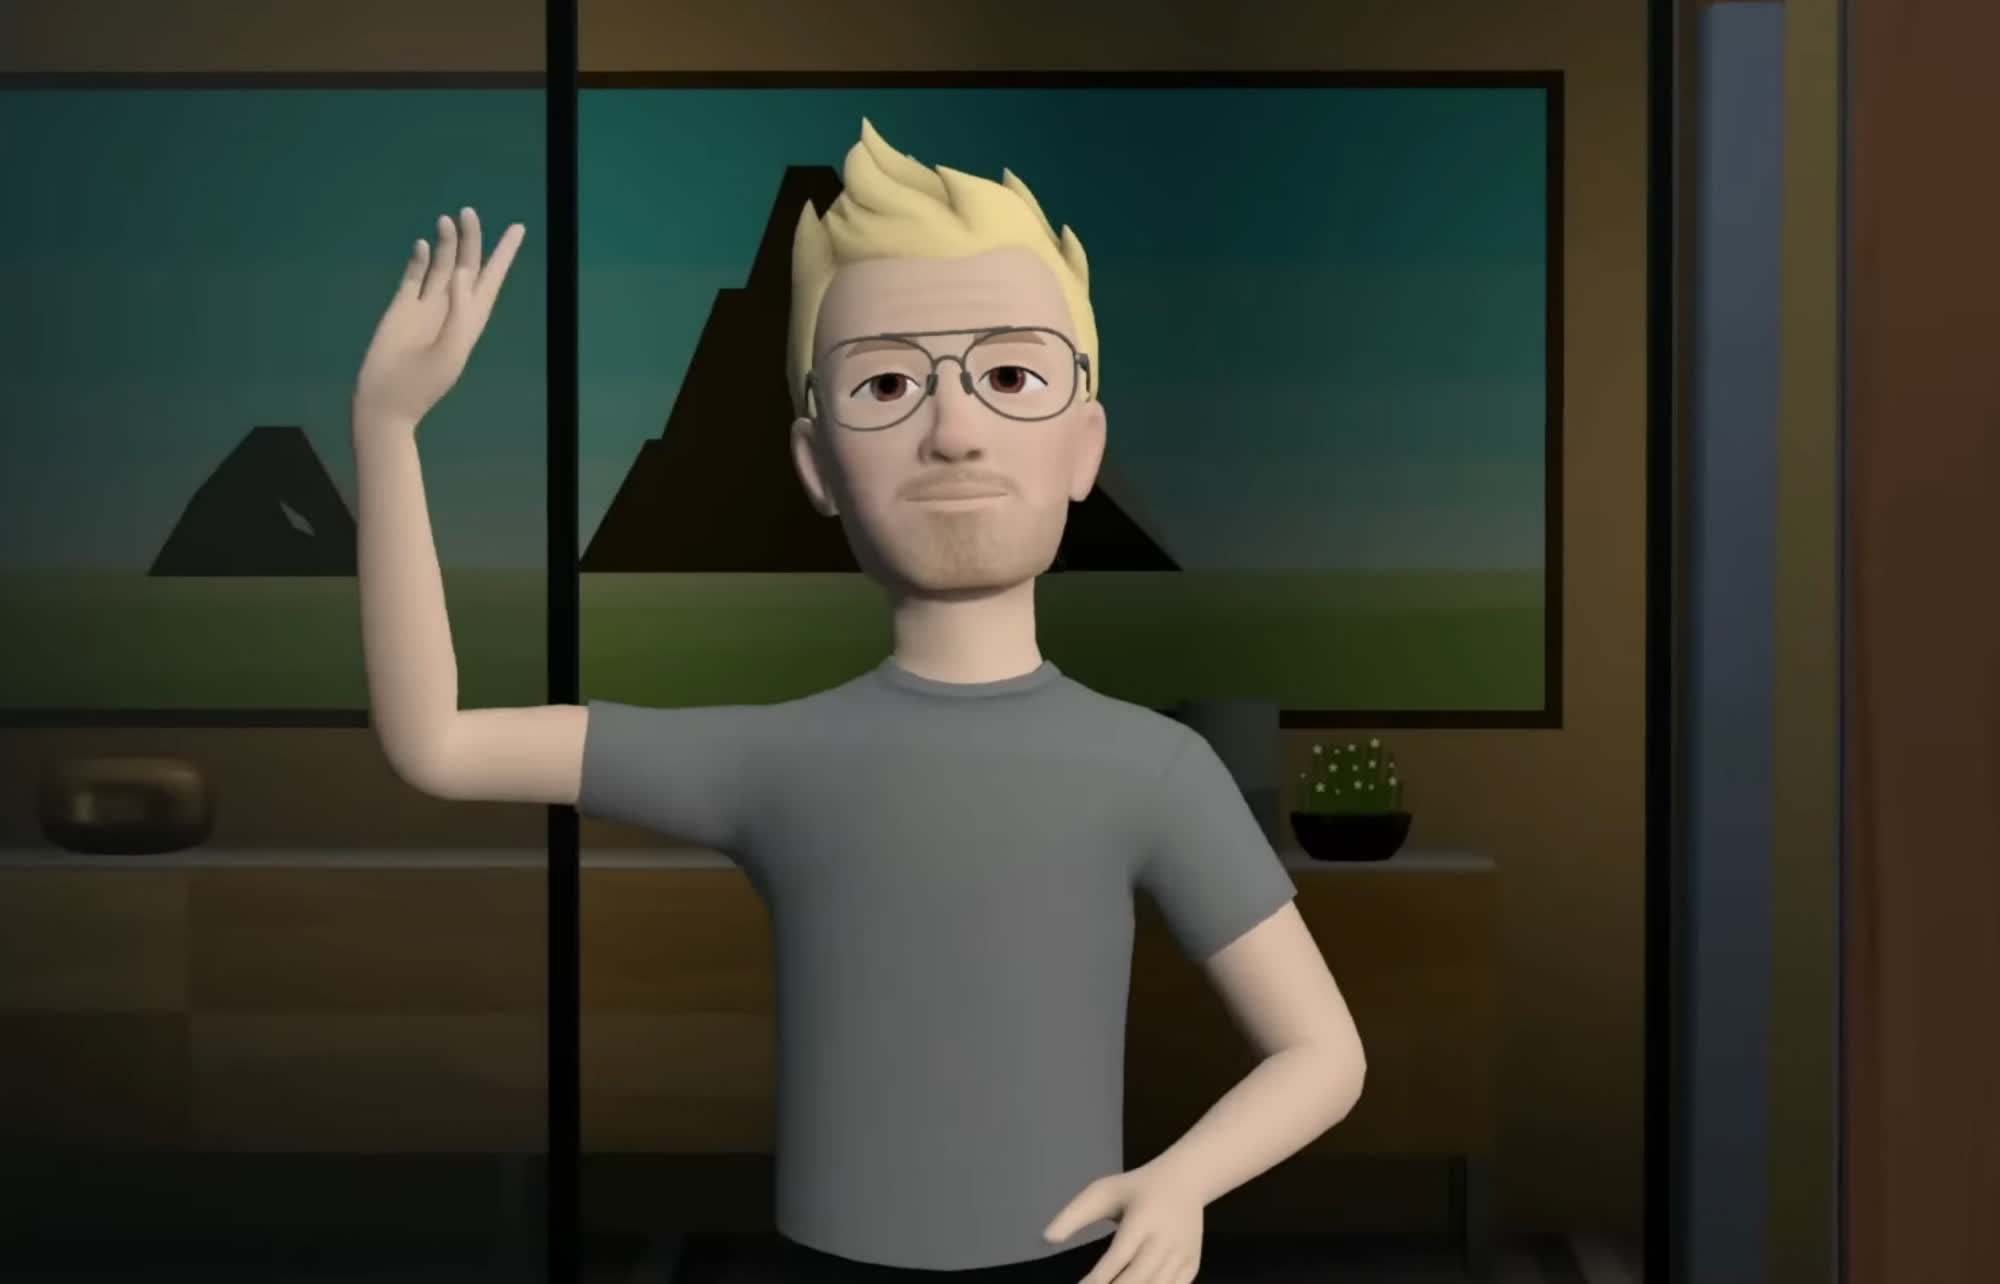 John Carmack steps out of Meta's VR mess